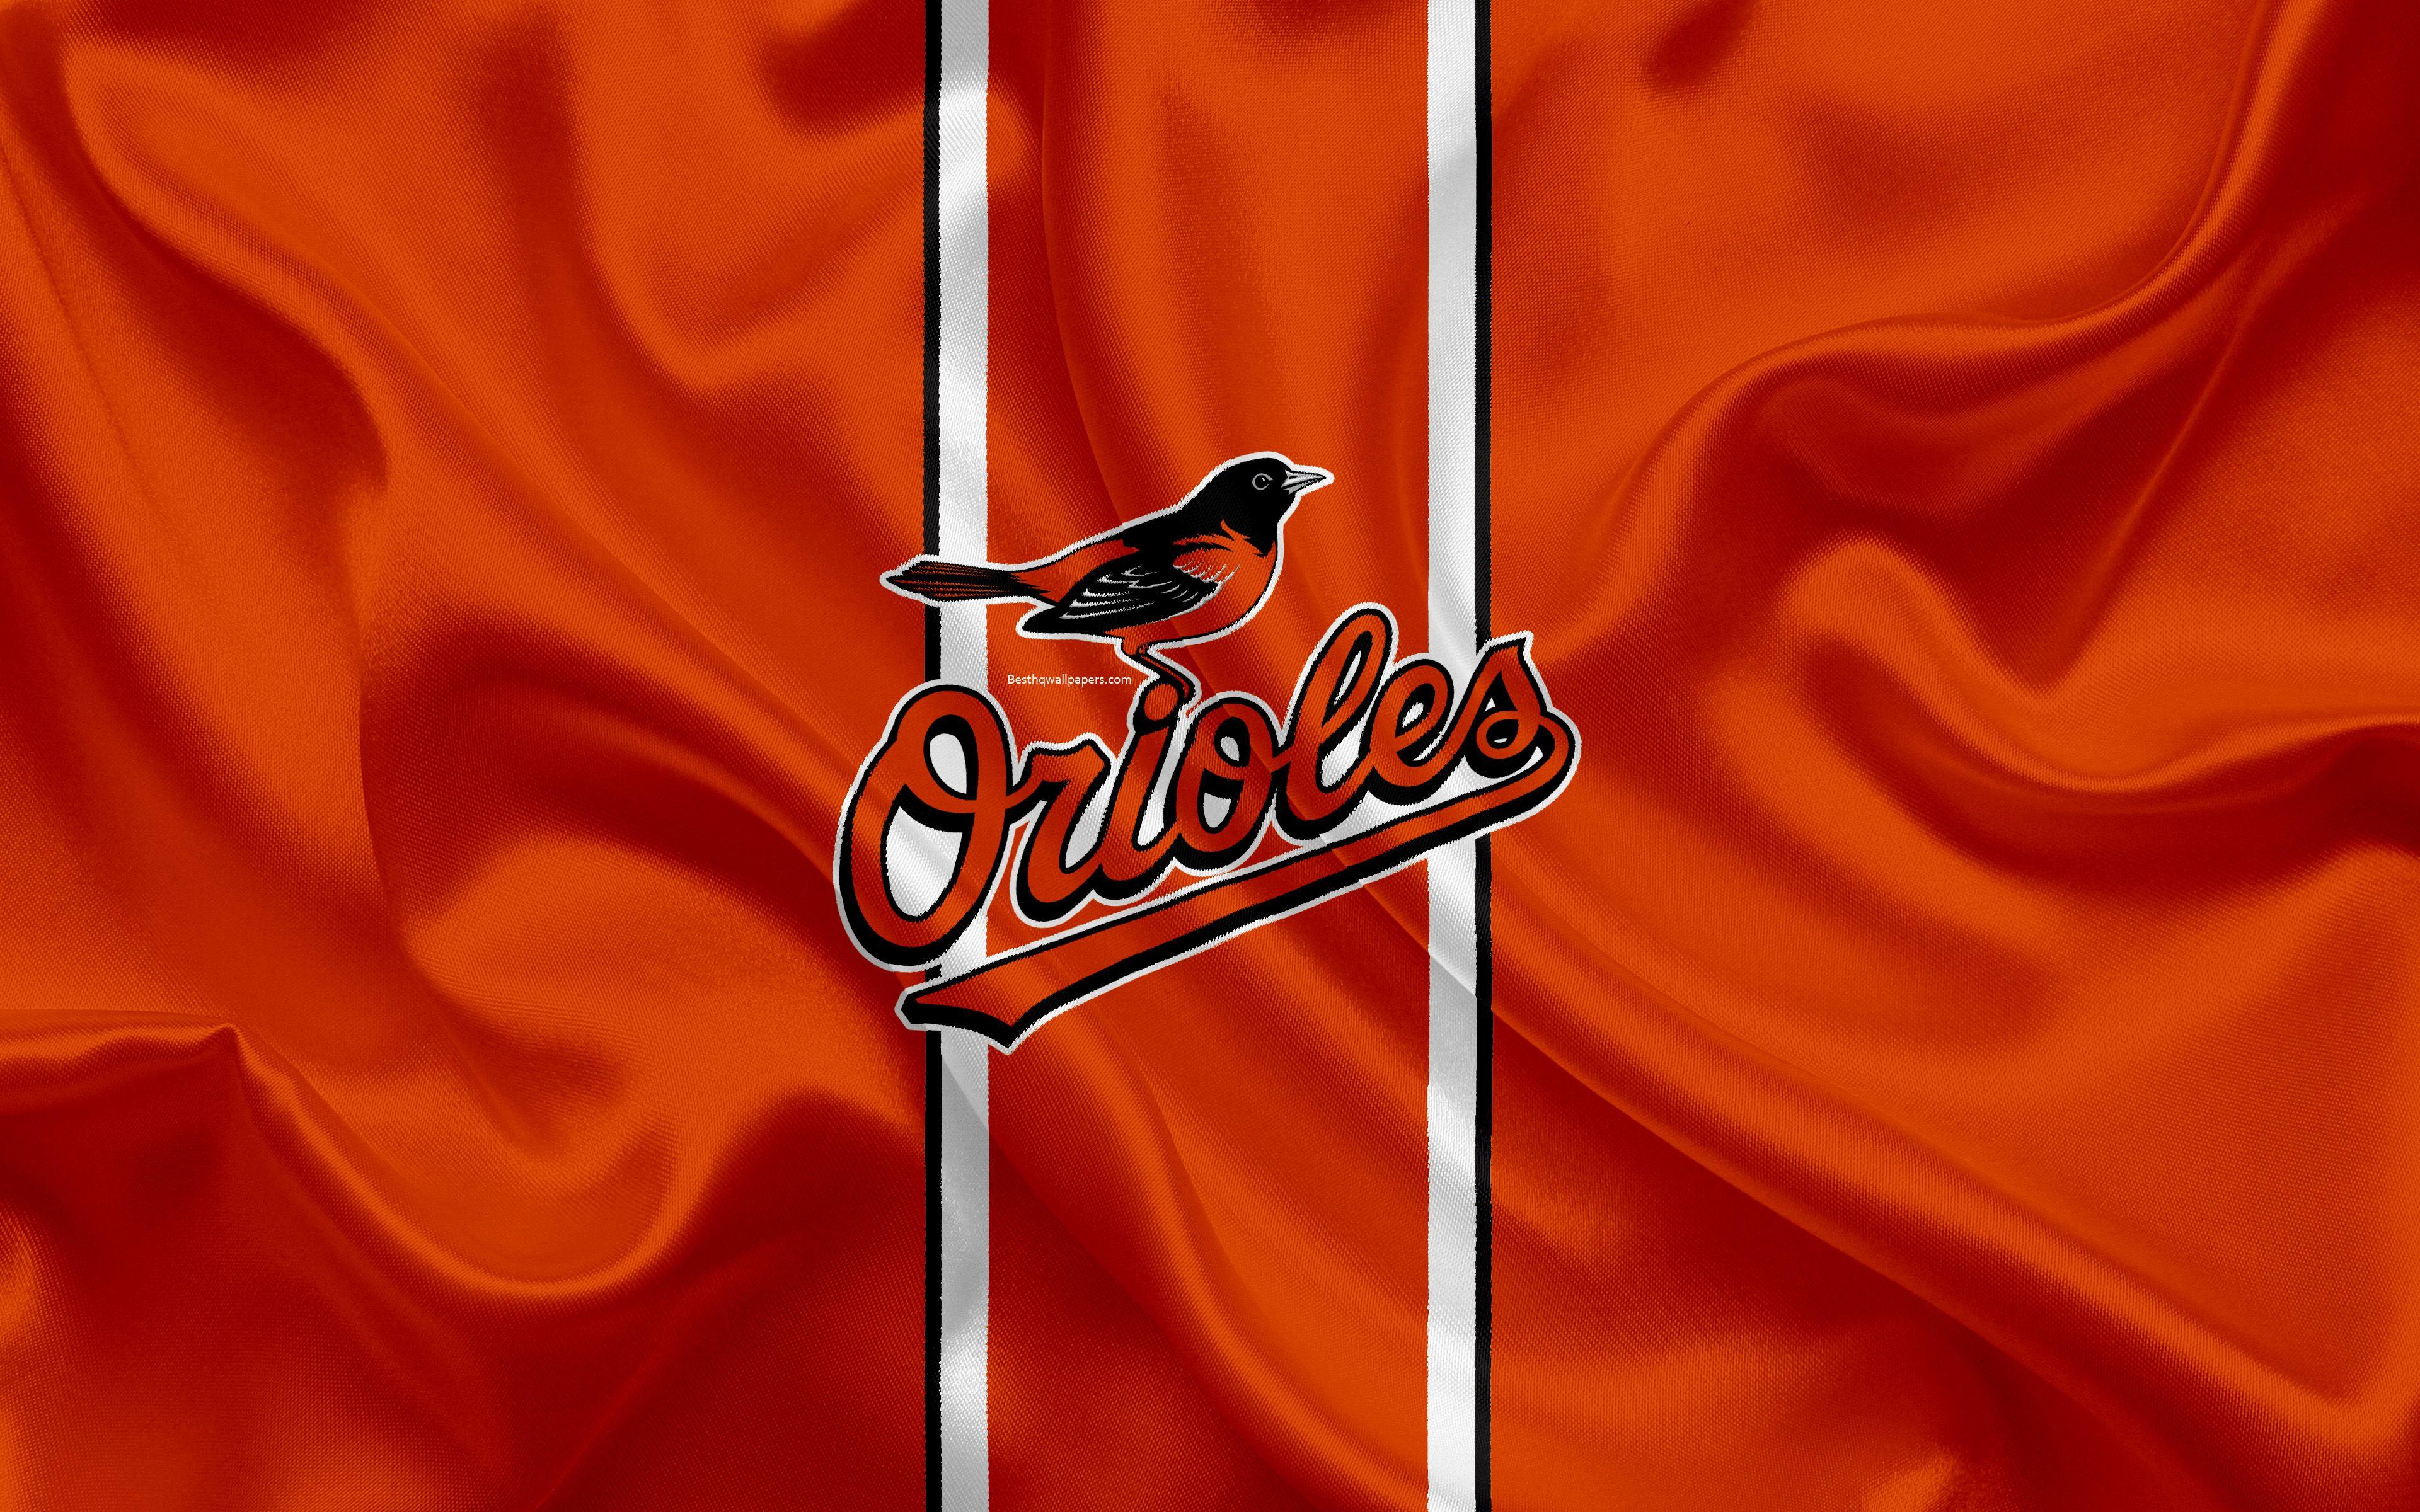 Baltimore Orioles wallpaper by bm3cross - Download on ZEDGE™